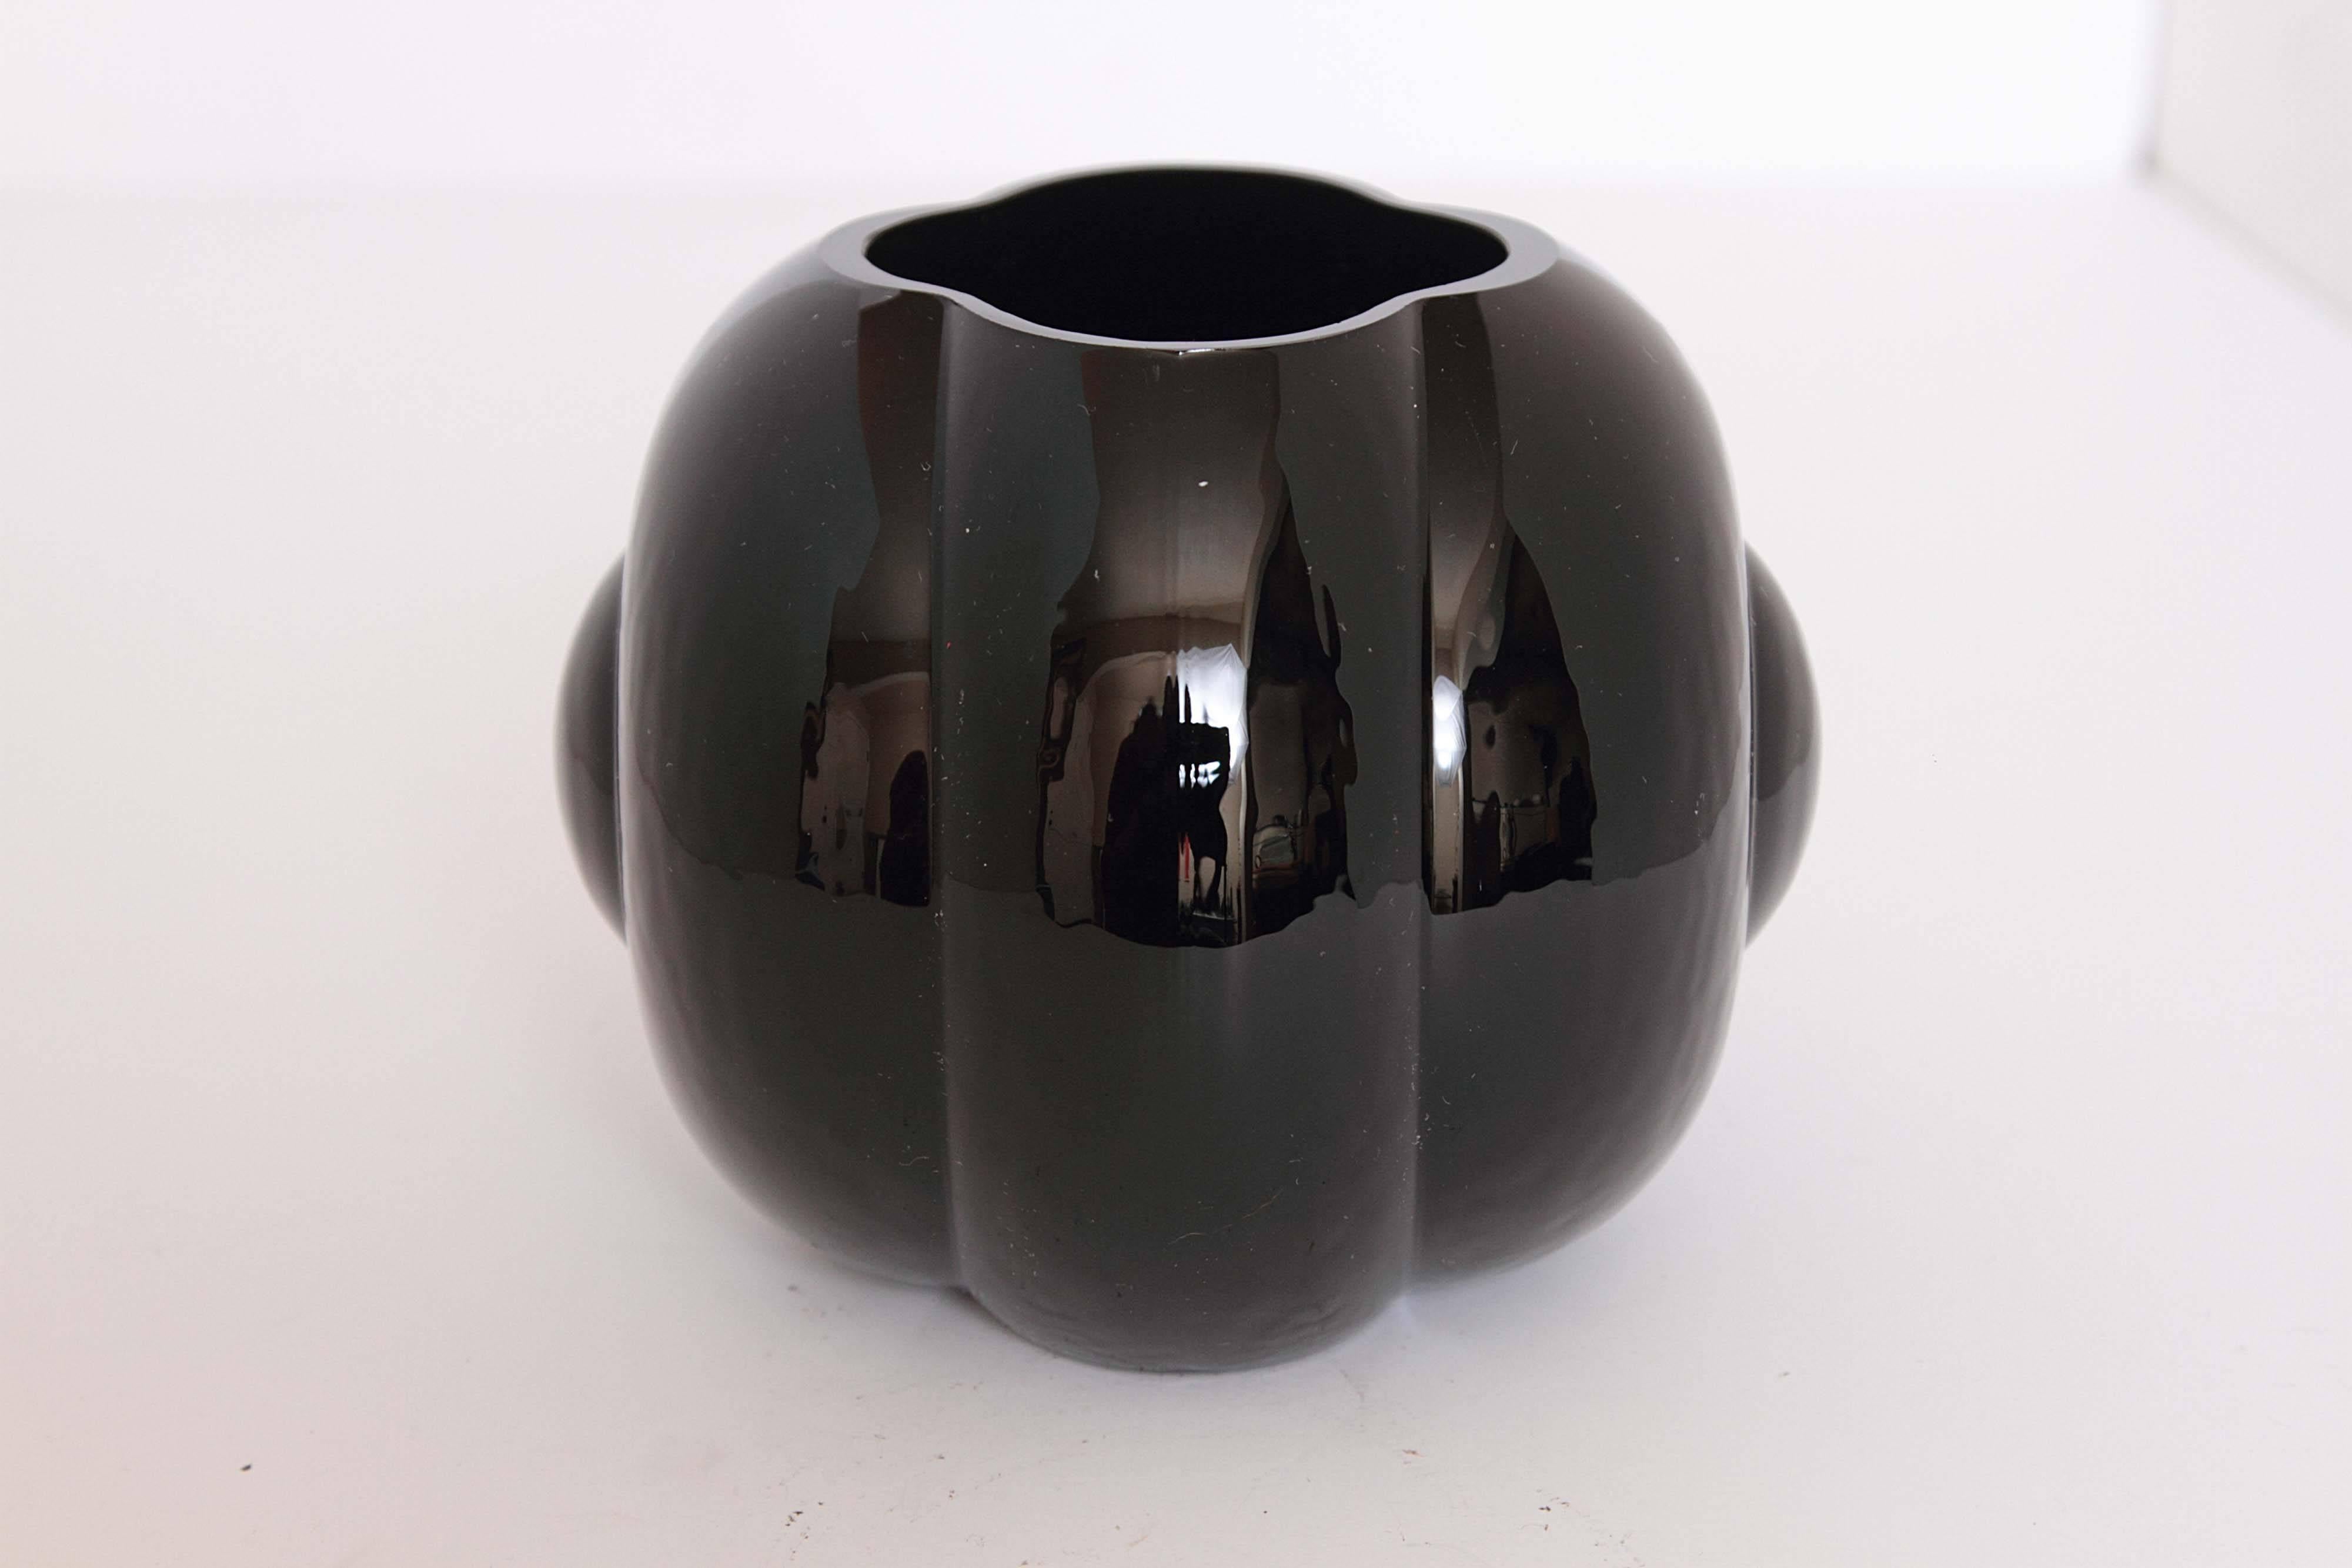 Single jet-black fishbowl vase by Sakier for Fostoria.
Form # 2404.
Very good condition.

Classic Mid Century Modern, art deco, machine age design